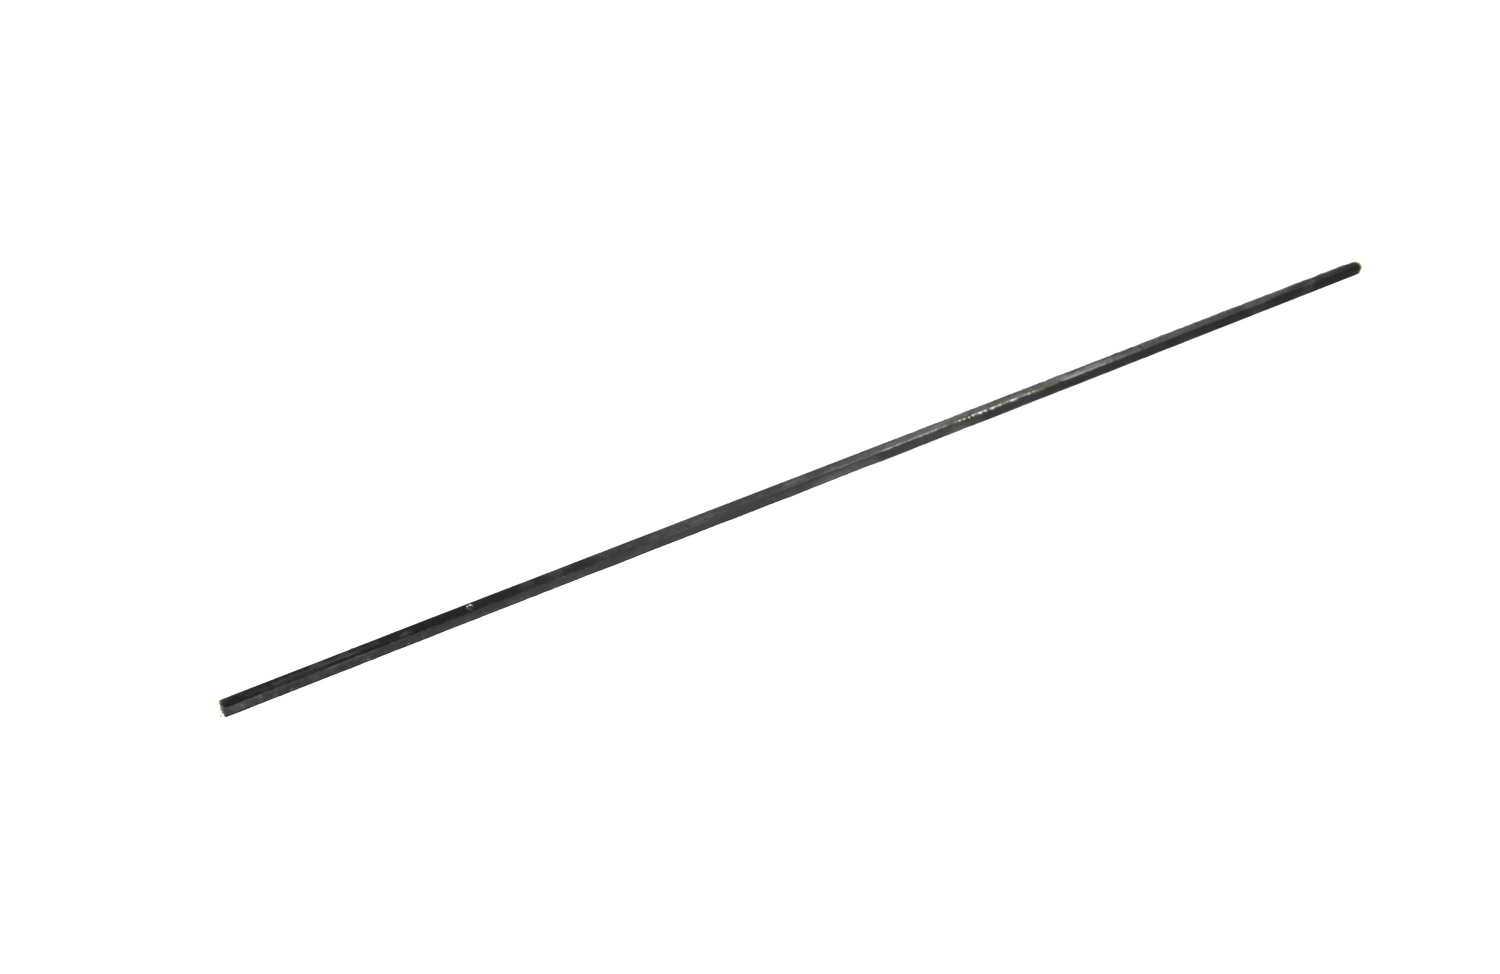 Вал тукового аппарата СКП 01.13.016(квадрат калибров 14)